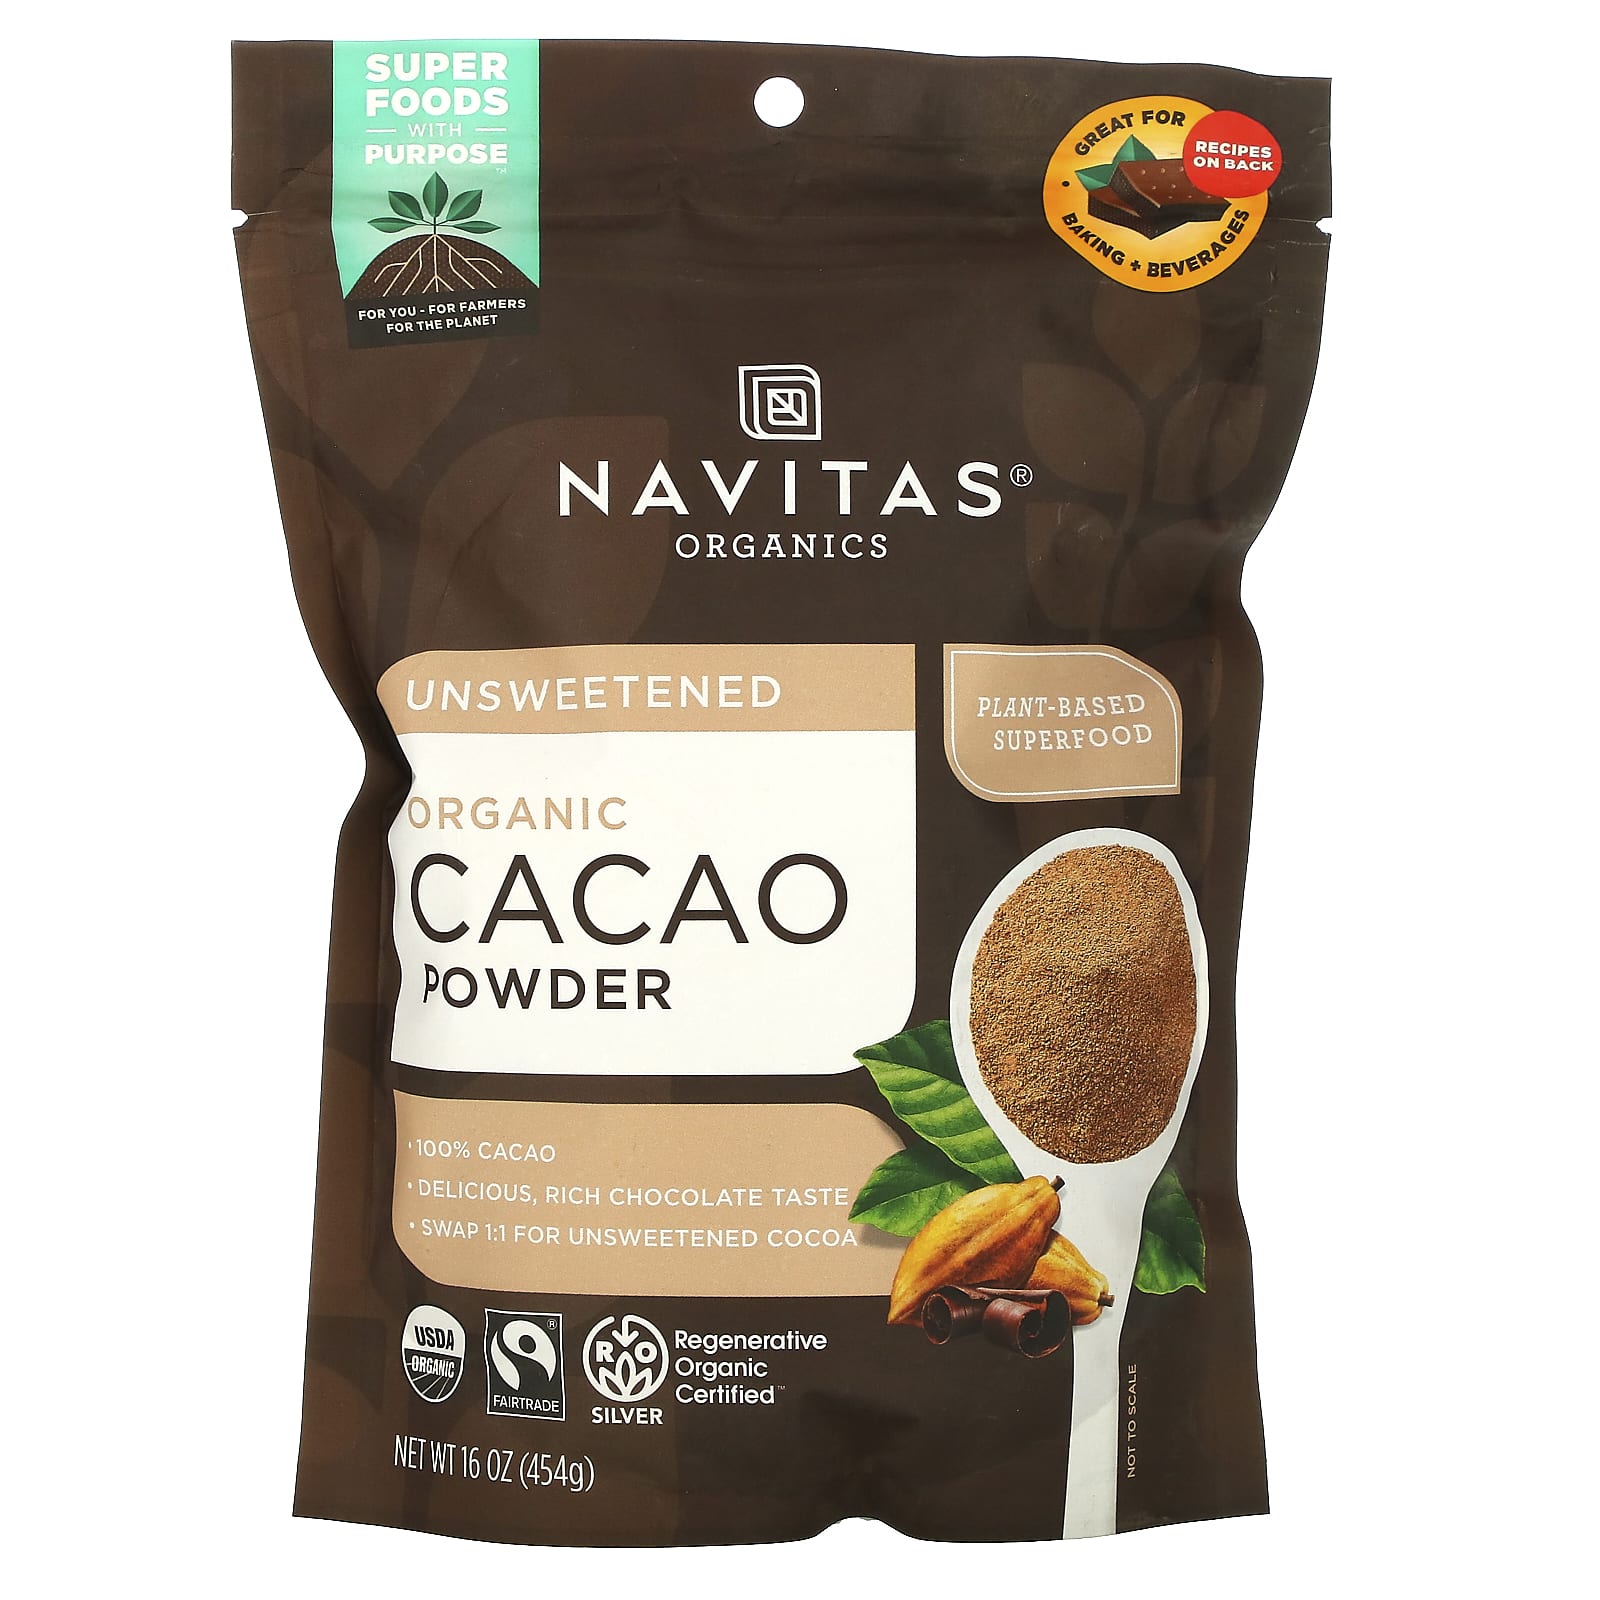 Navitas Organics Органический порошок какао 16 унц. (454 г) nunaturals органический какао порошок 454 г 1 фунт